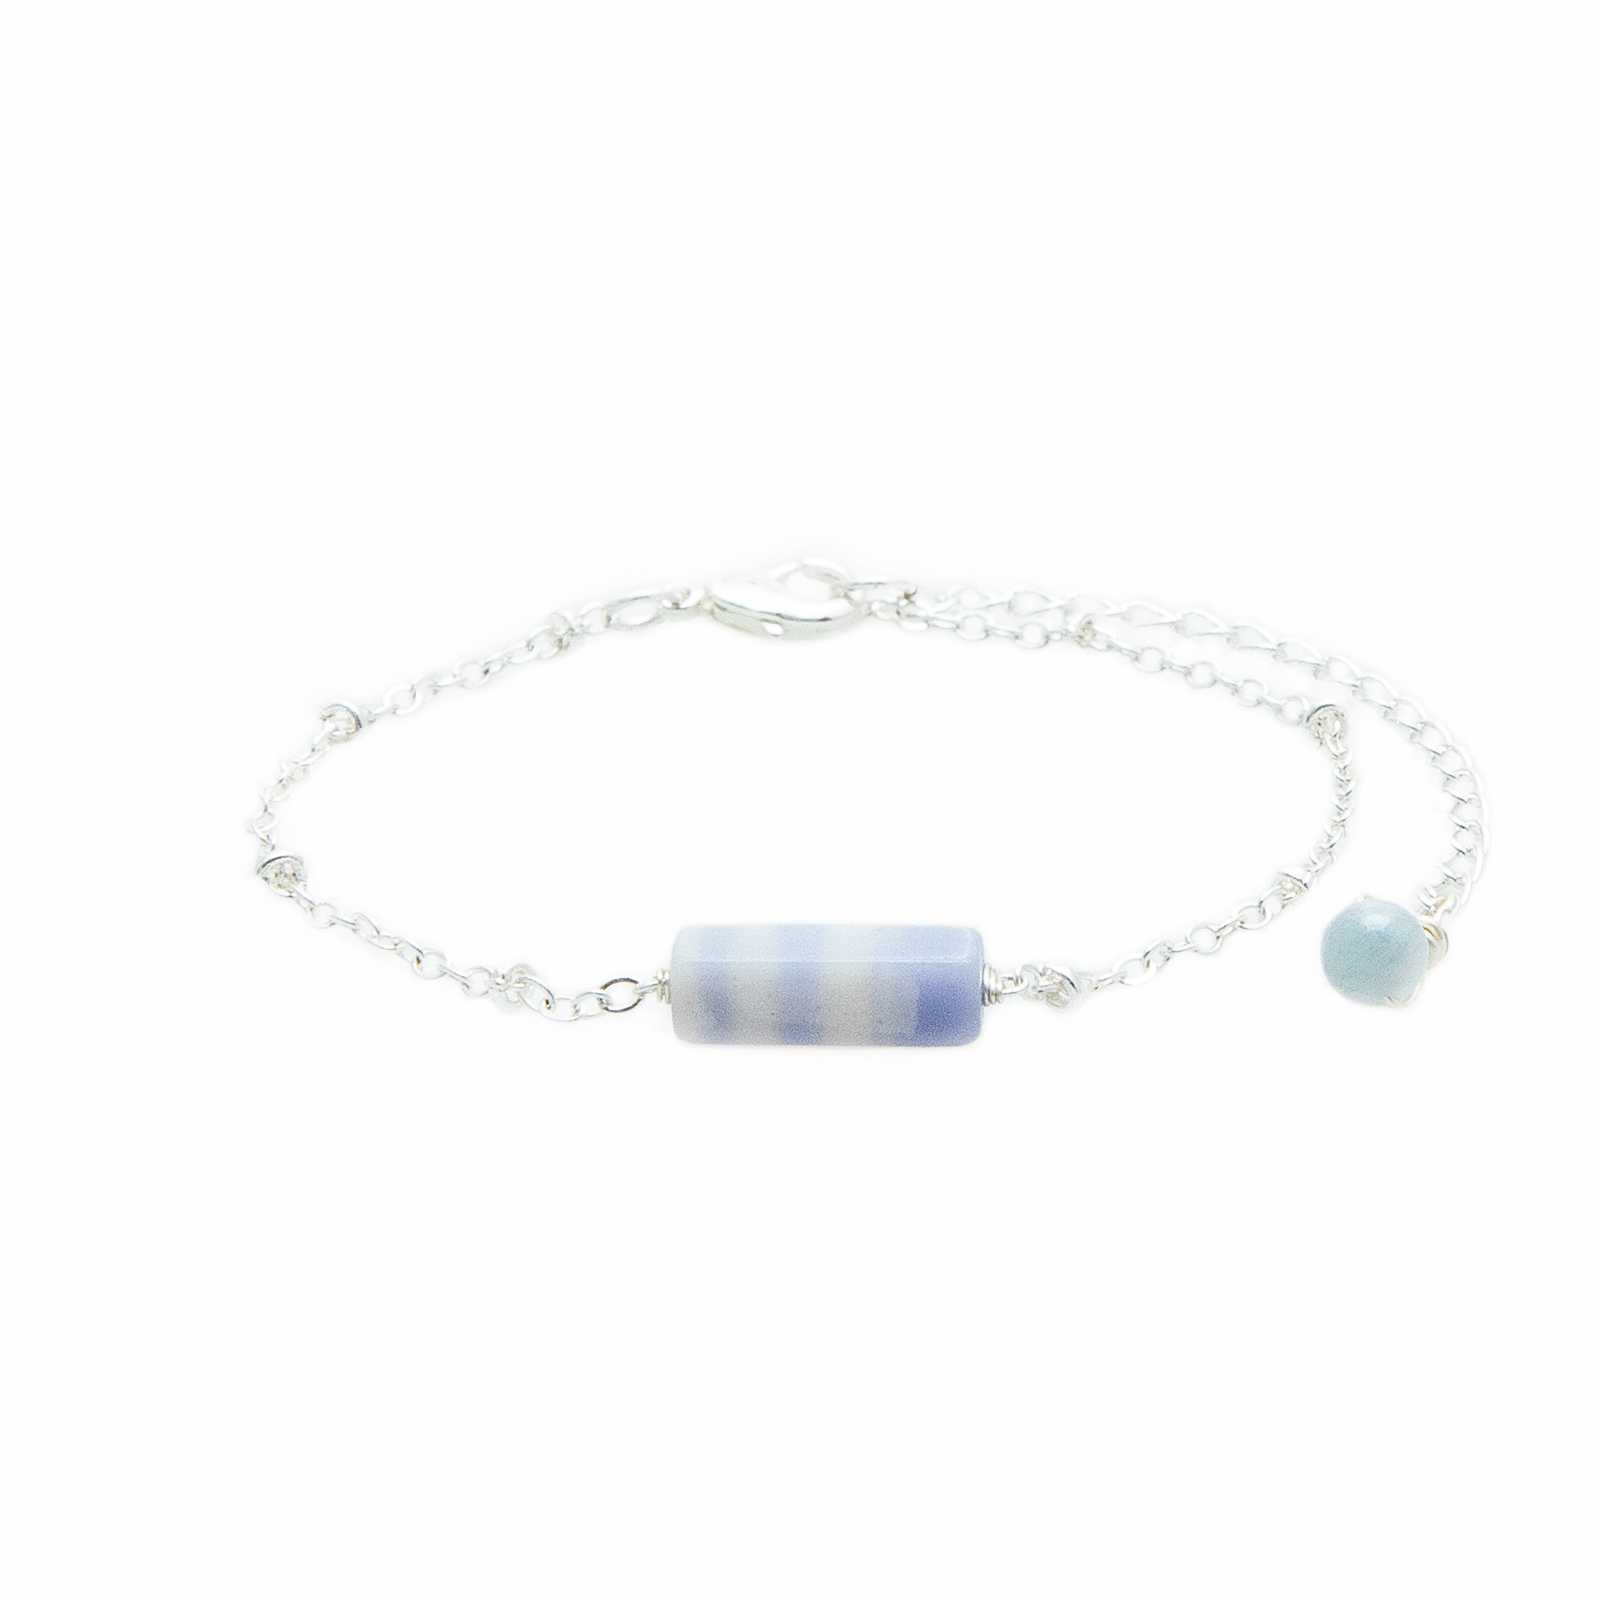 Blue Lace Agate Gemstone Chip Bracelet